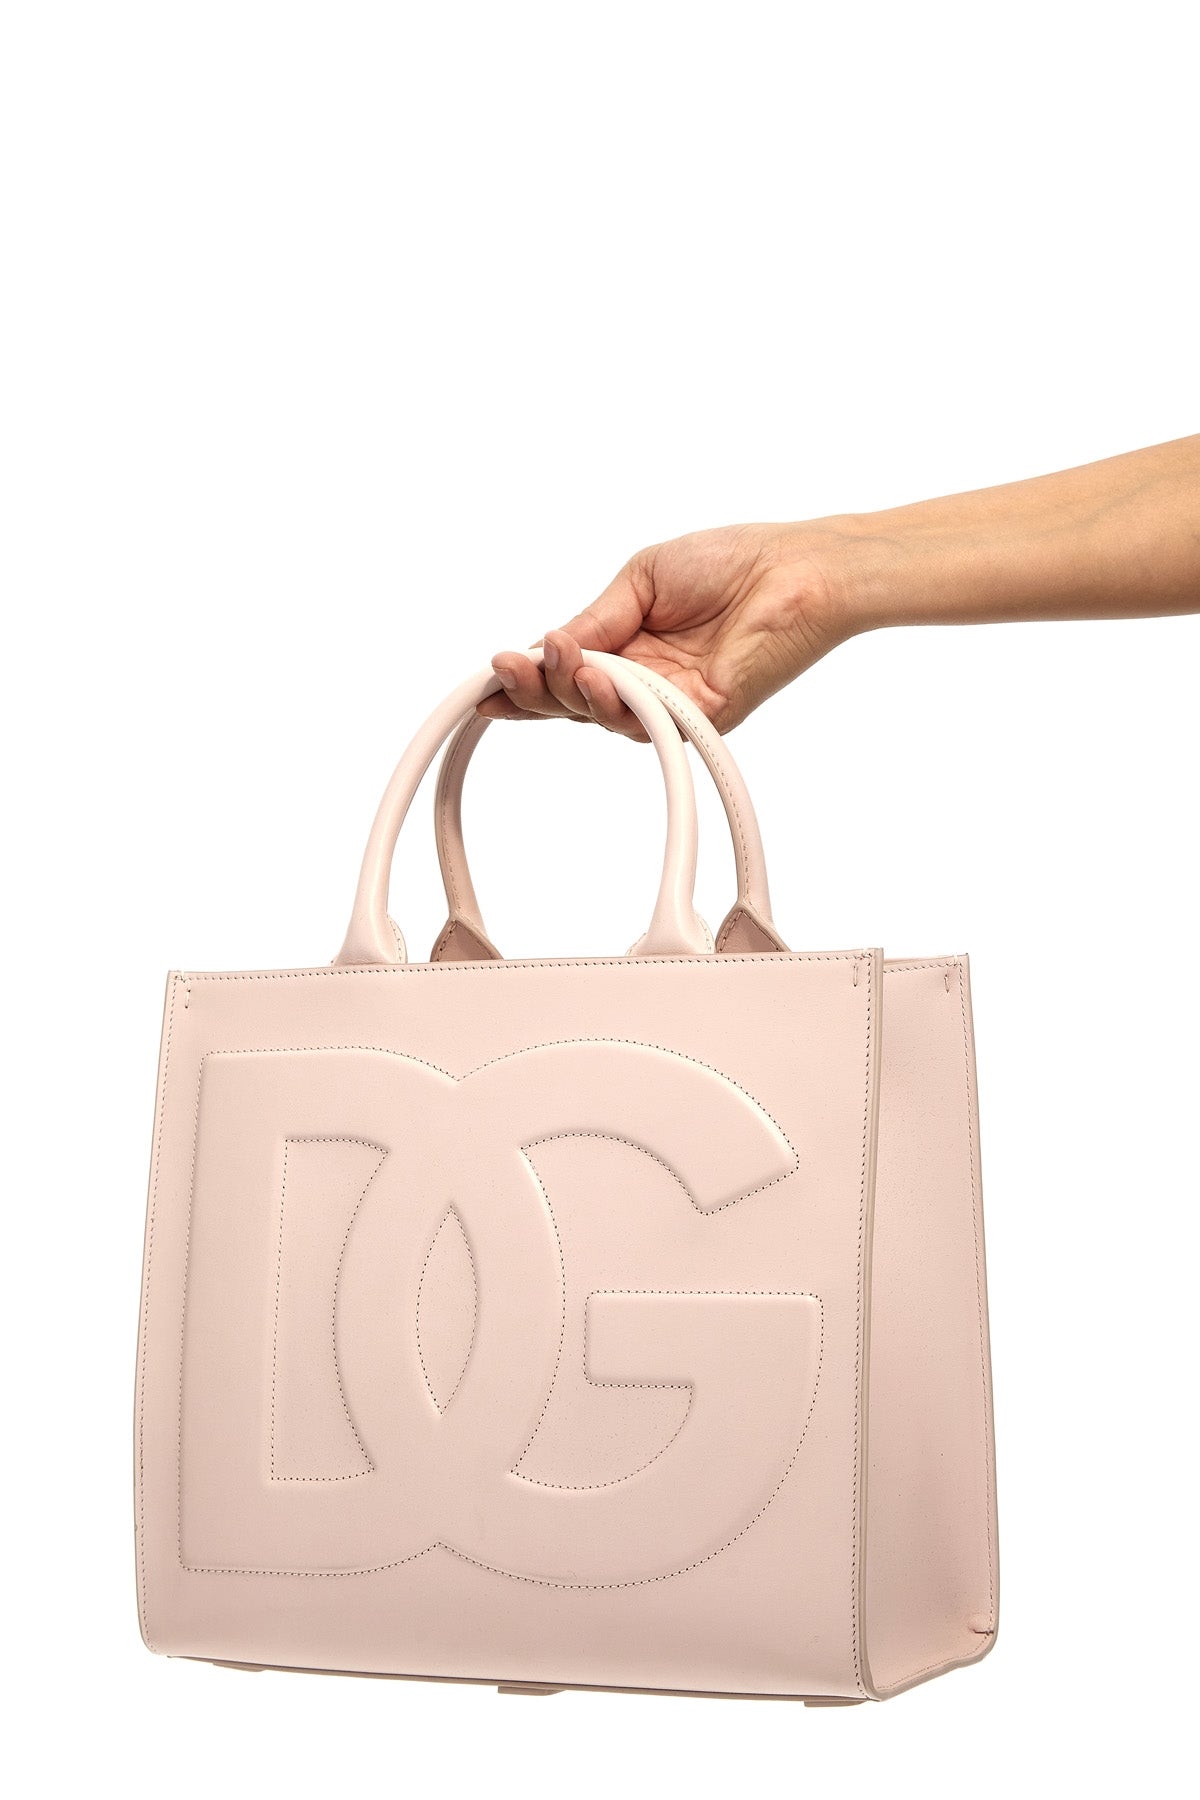 Dolce & Gabbana 'DG DAILY' SMALL SHOPPING BAG BB7272AQ26987984